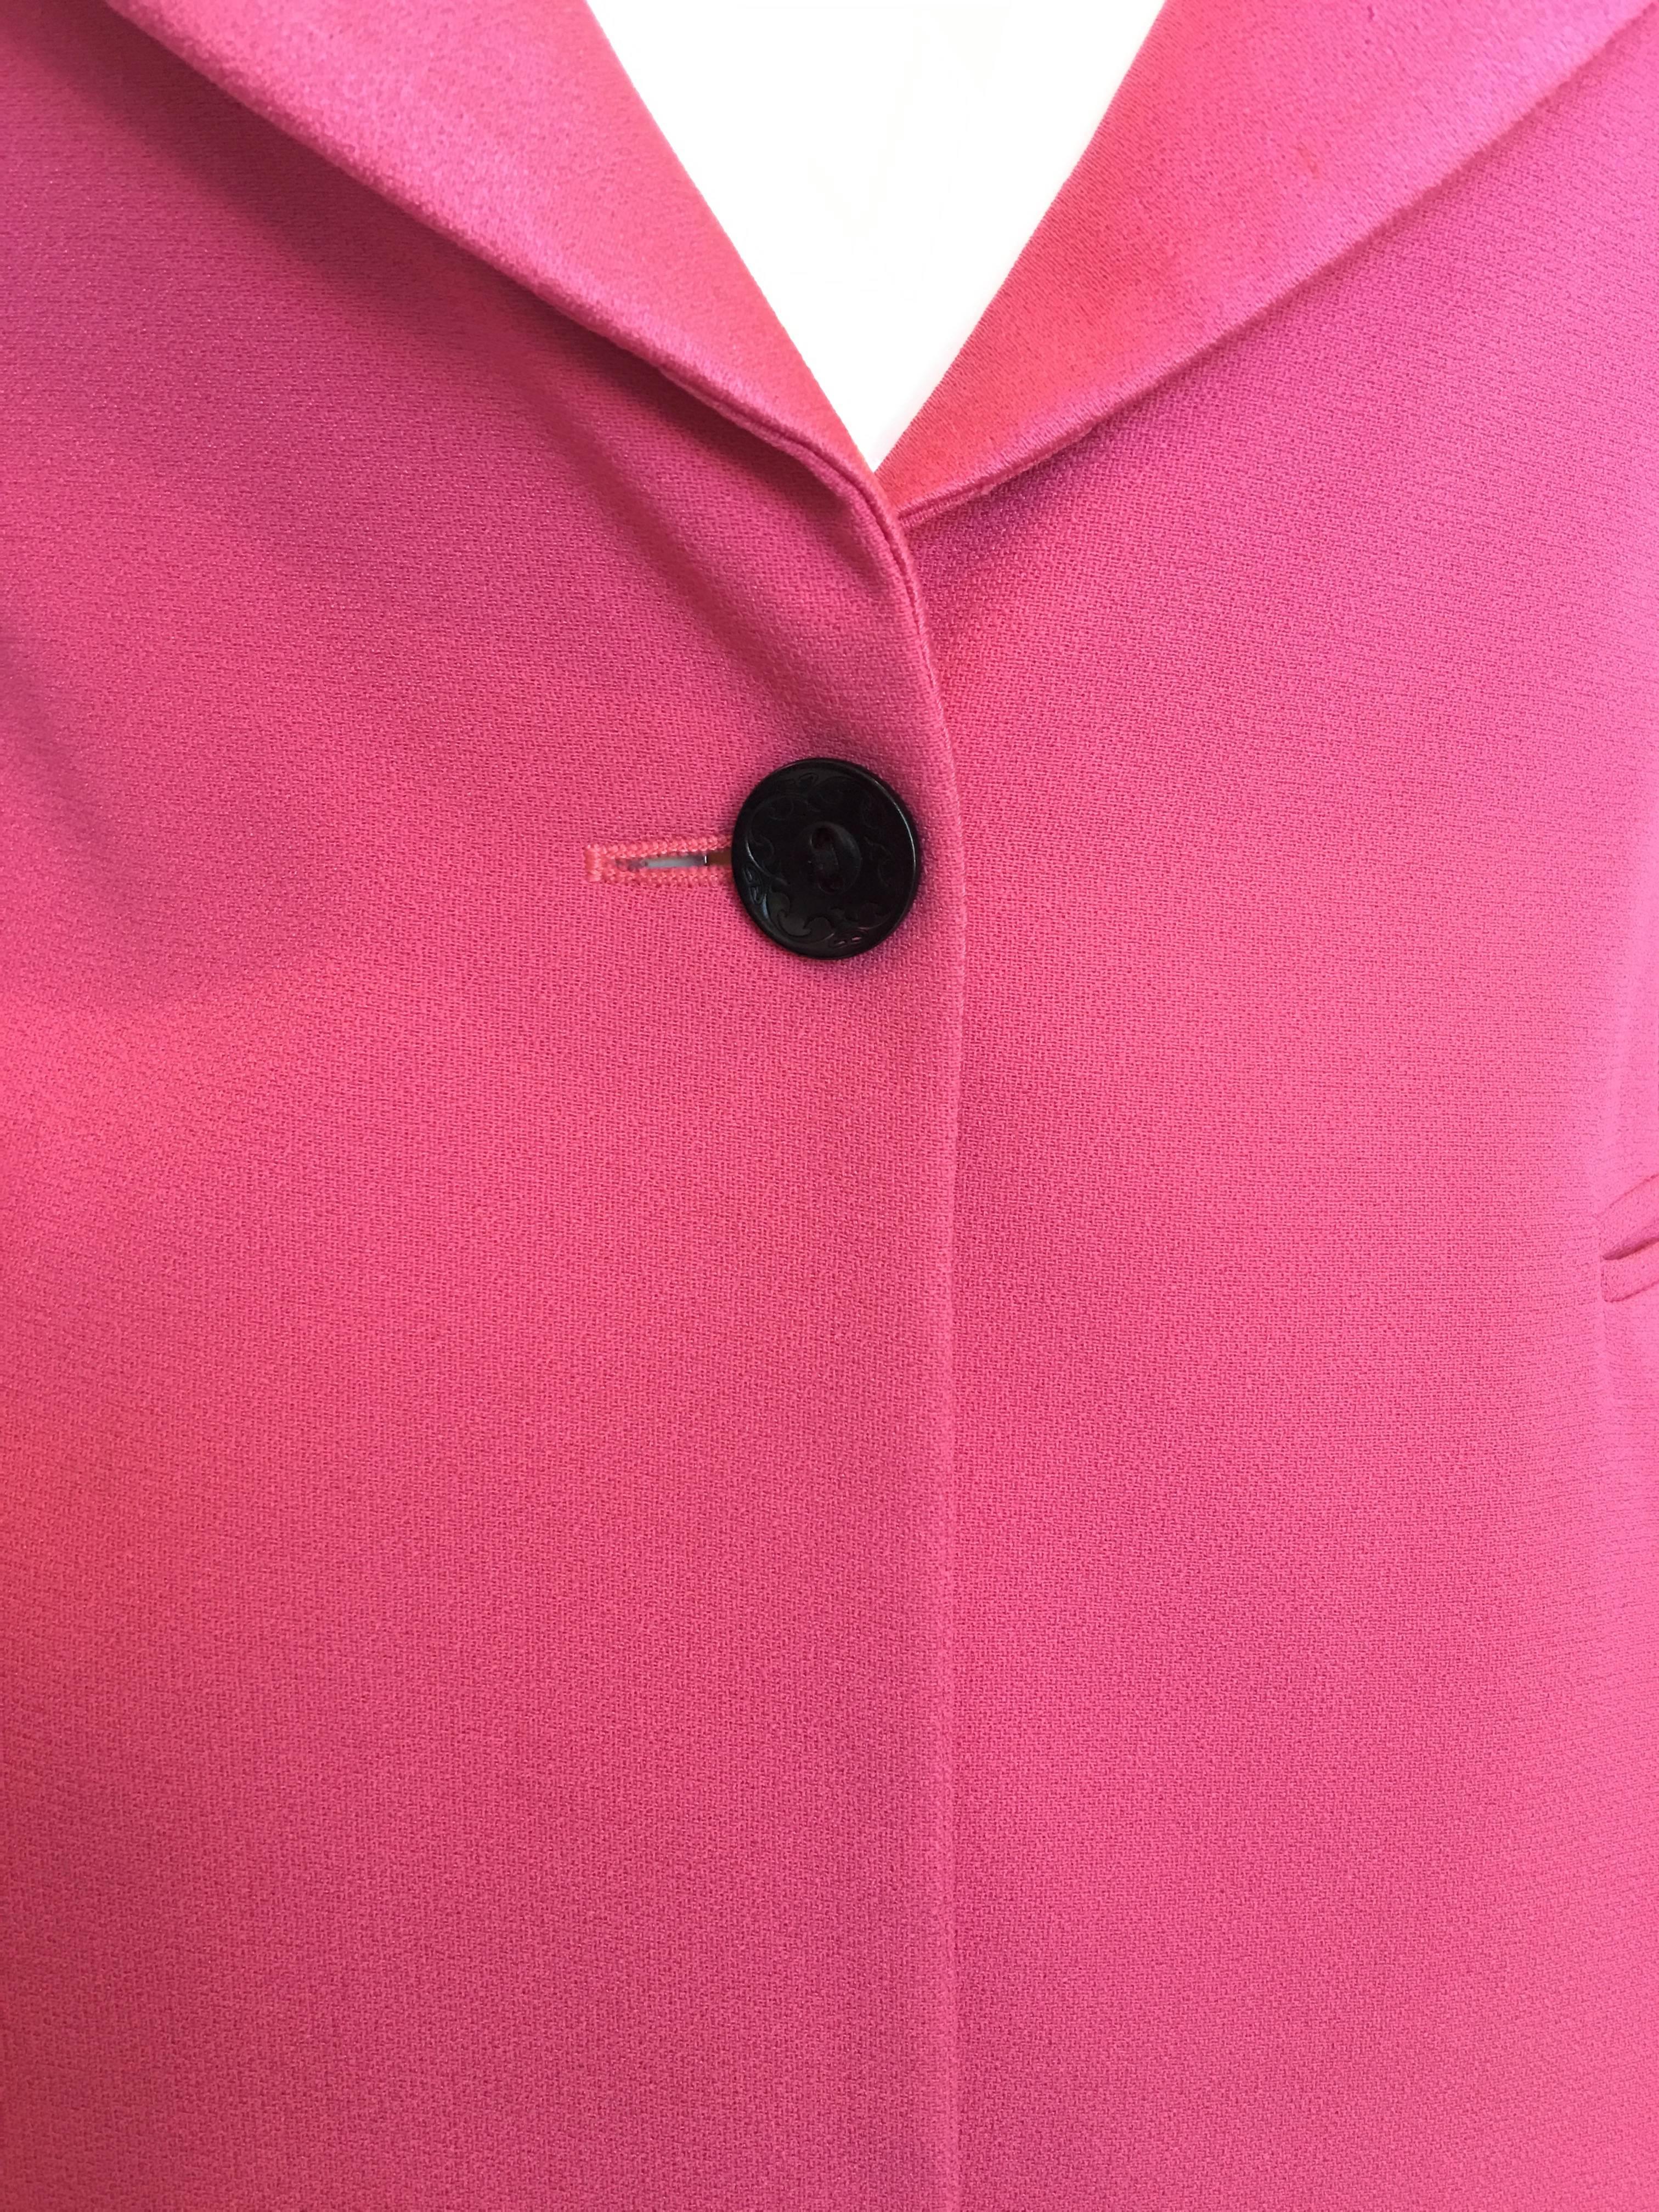 Bella Frued Pink Tux Style Jacket 1